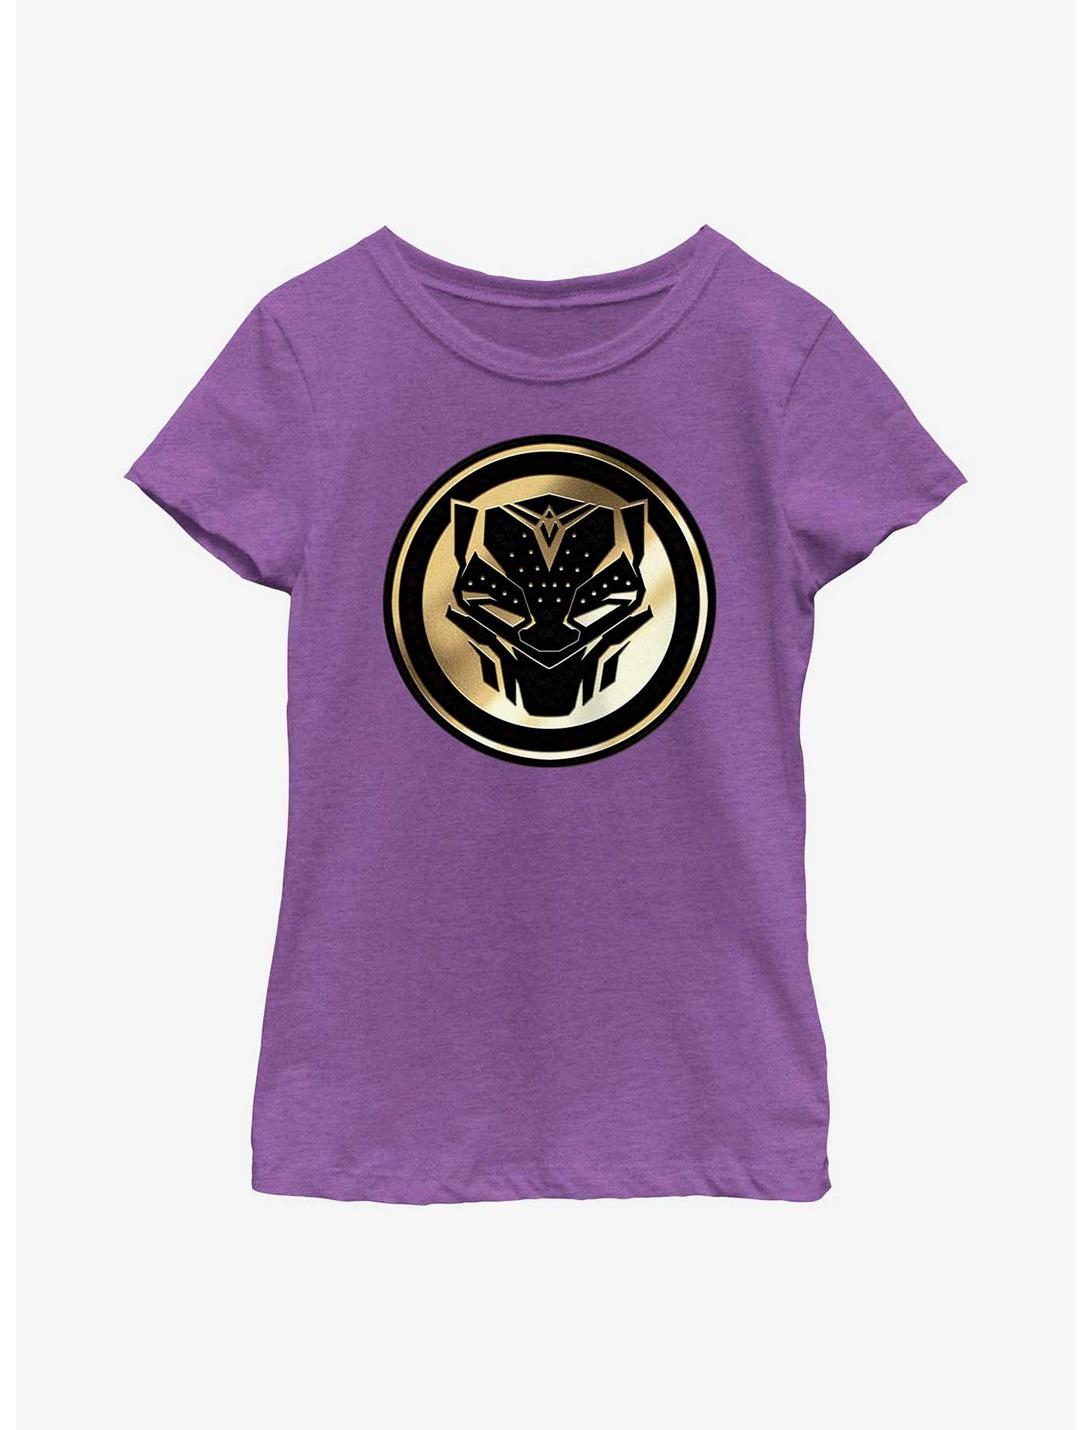 Marvel Black Panther: Wakanda Forever Golden Emblem Youth Girls T-Shirt, PURPLE BERRY, hi-res